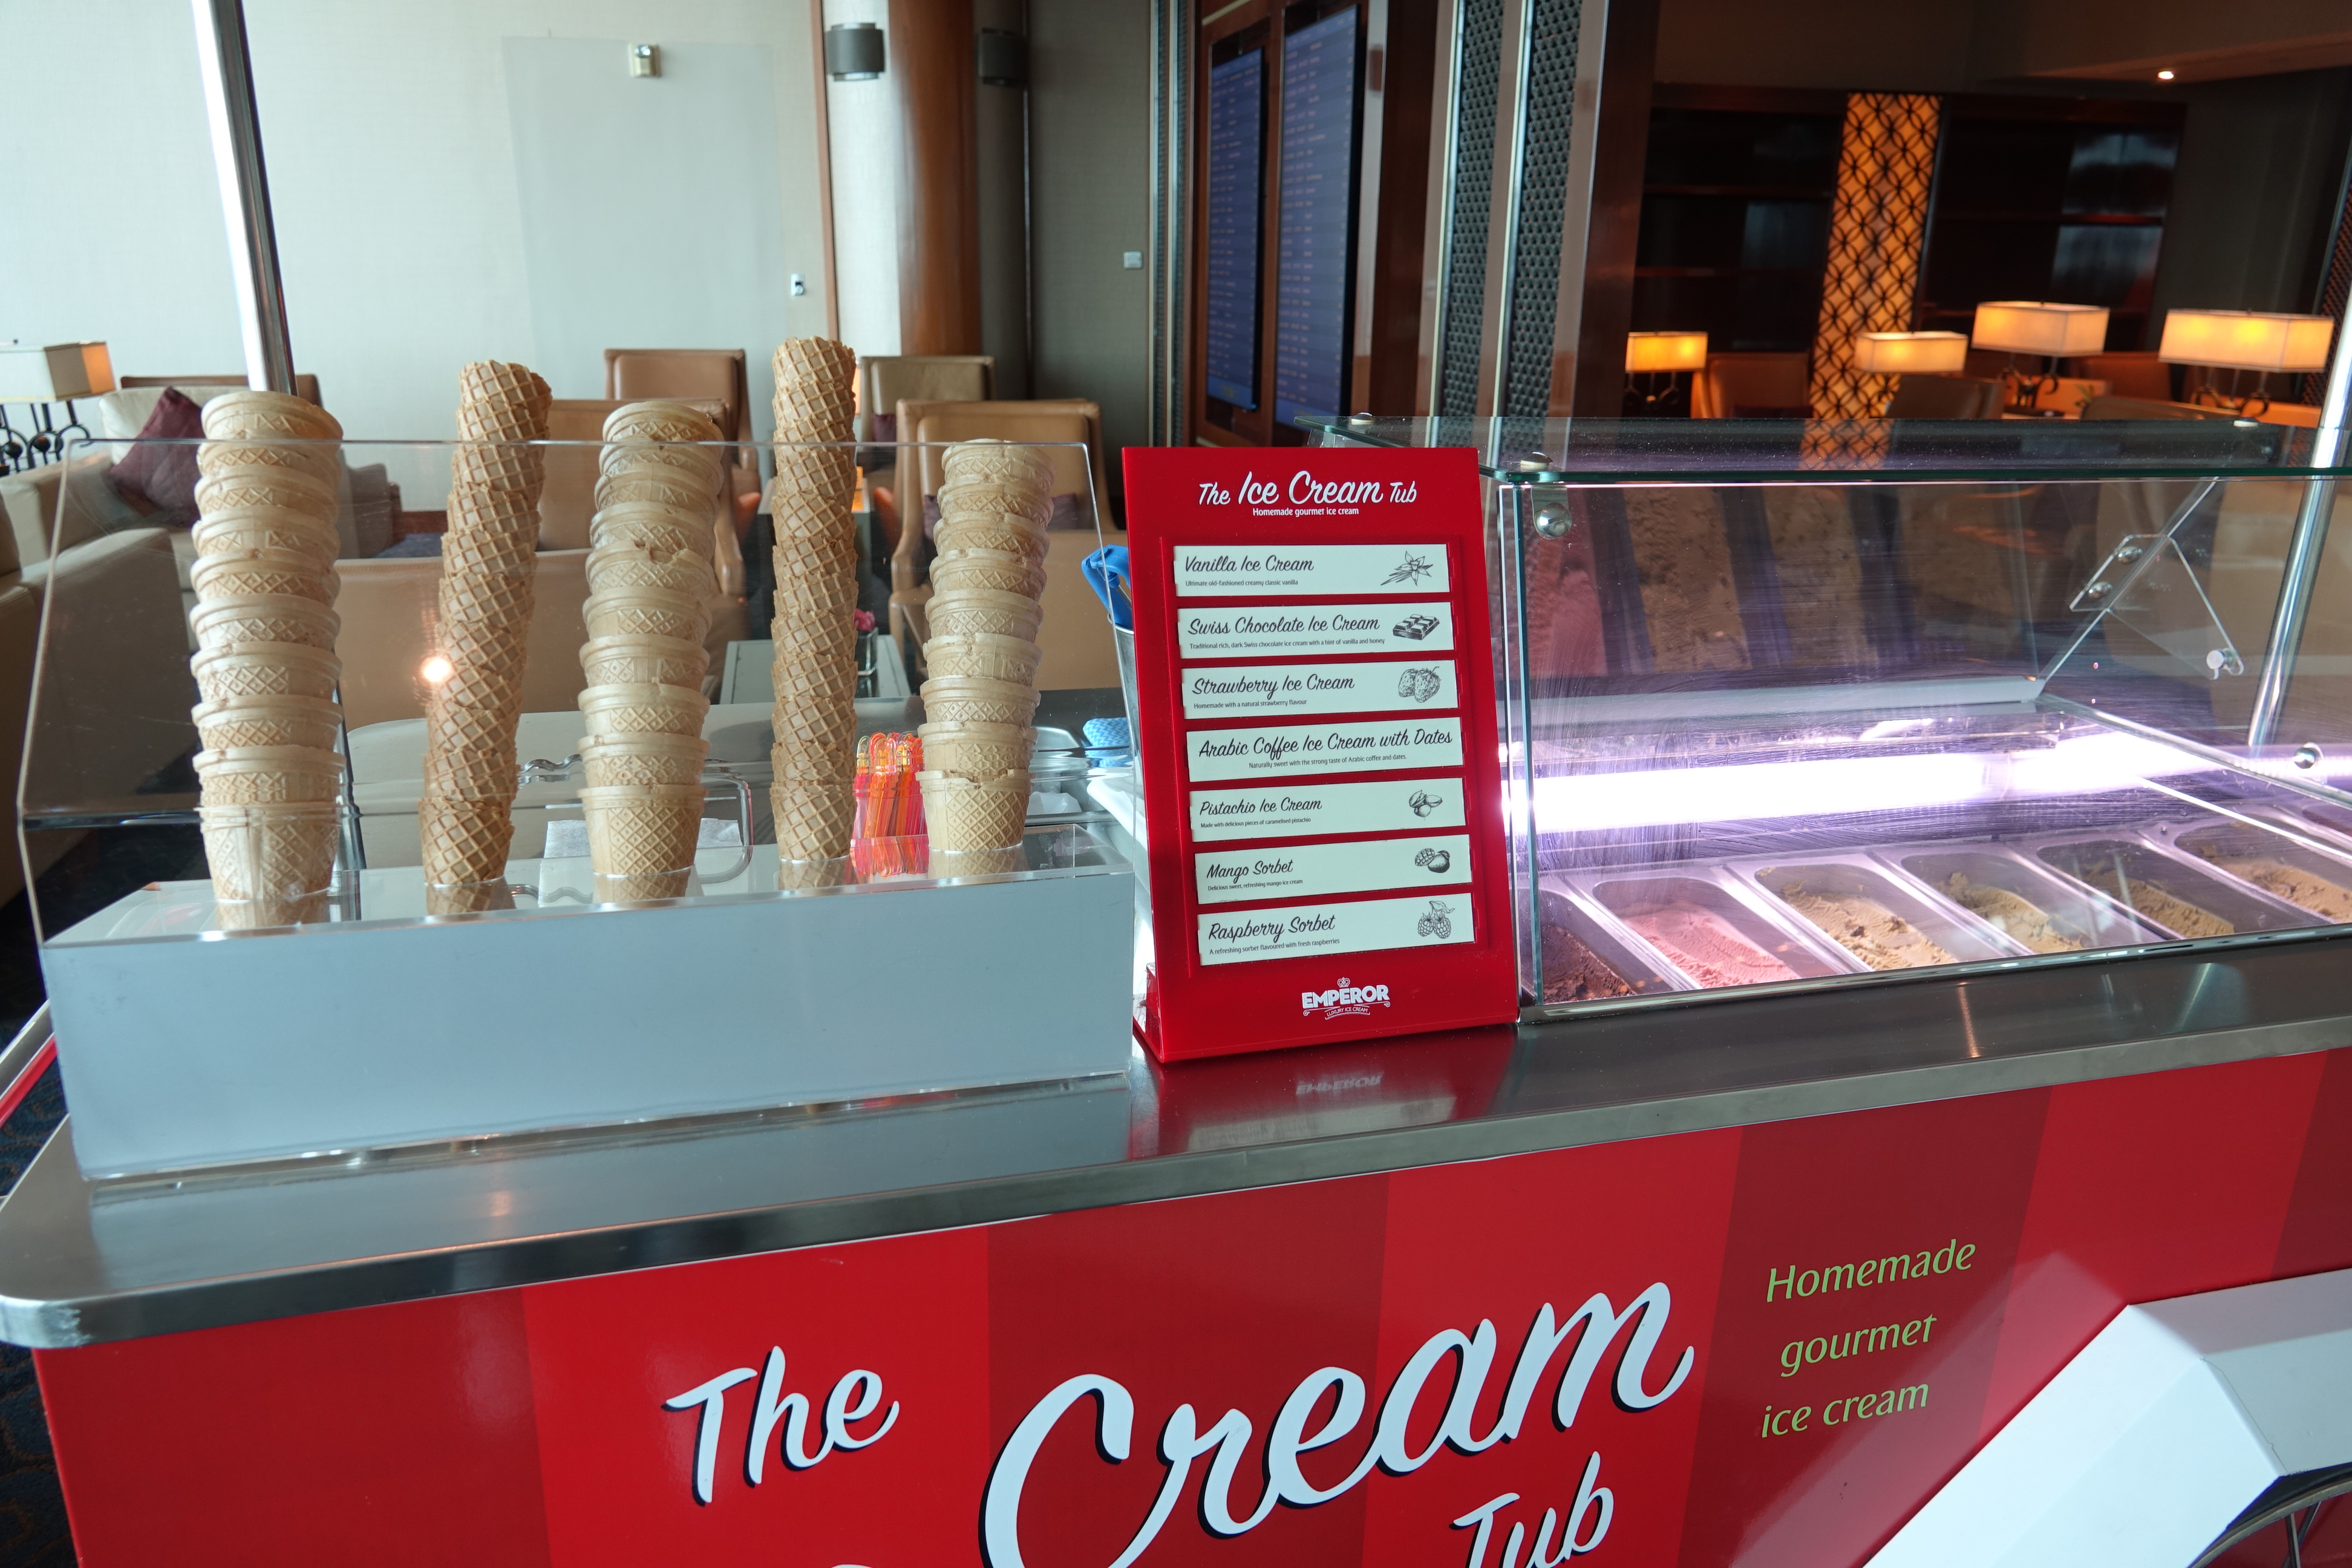 a display of ice cream cones